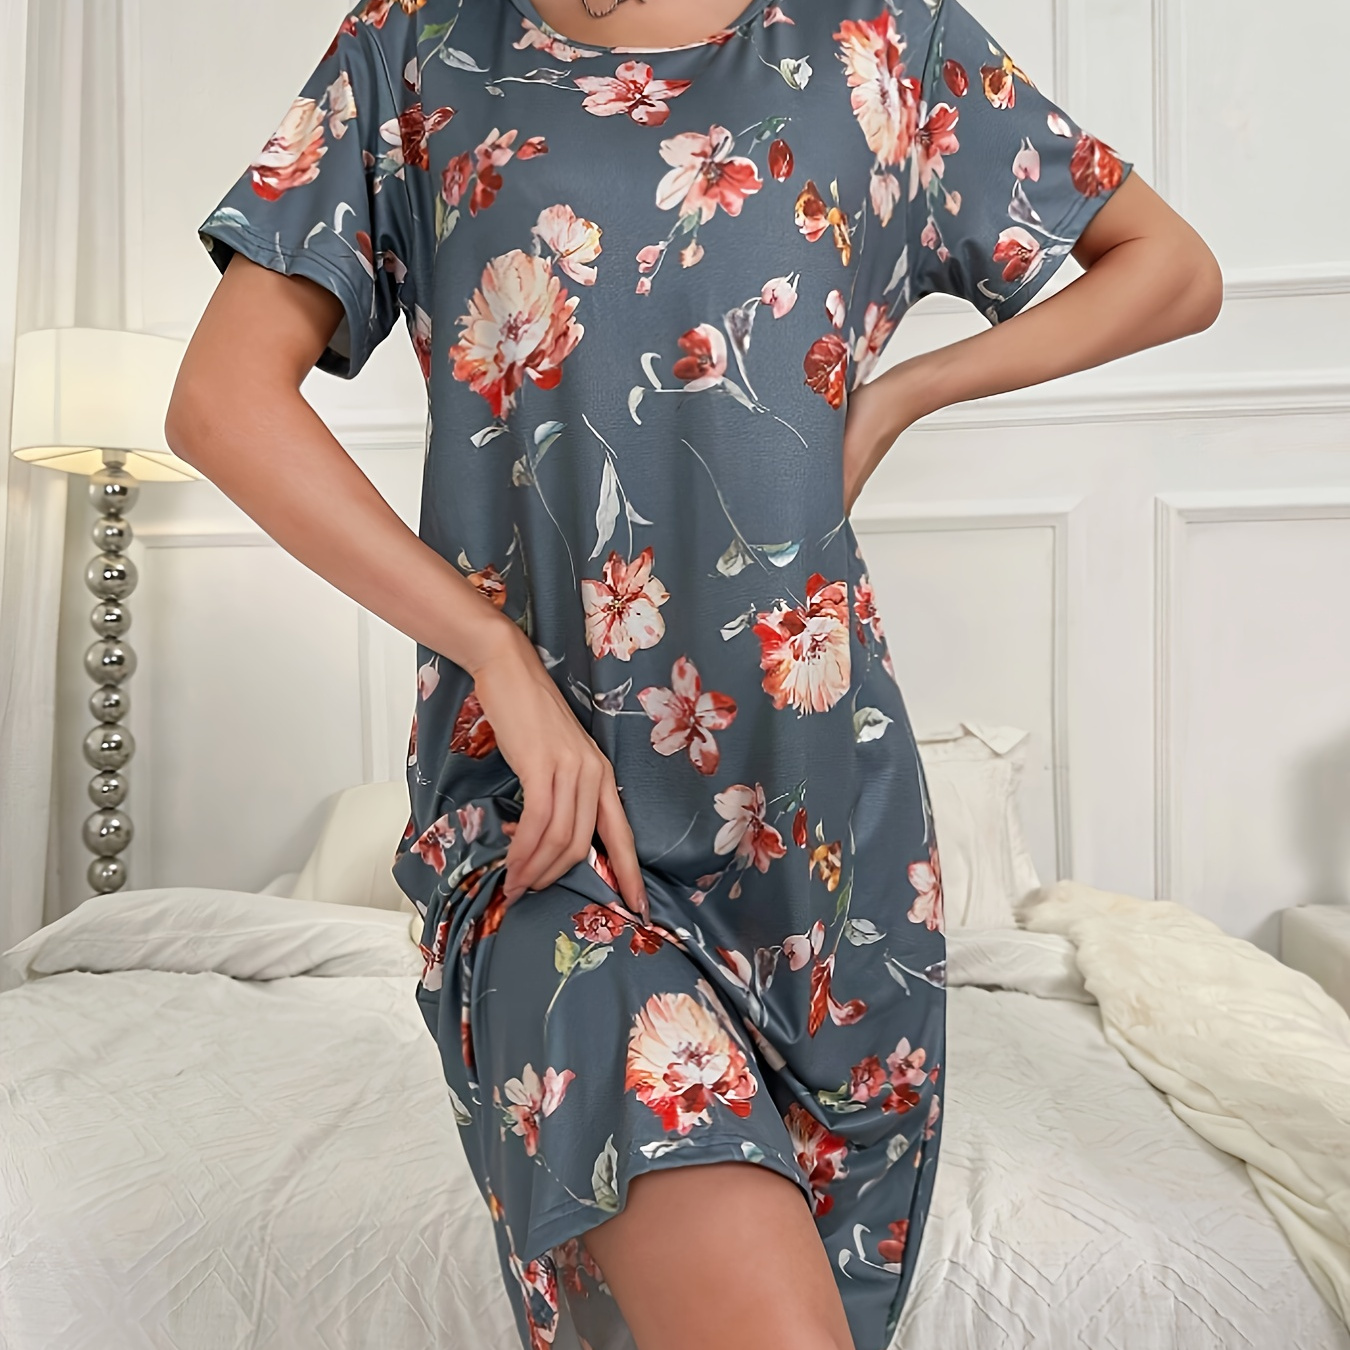 

Women's Floral Print Casual Sleepwear Dress, Short Sleeve Round Neck Tee Dress, Comfortable Nightgown